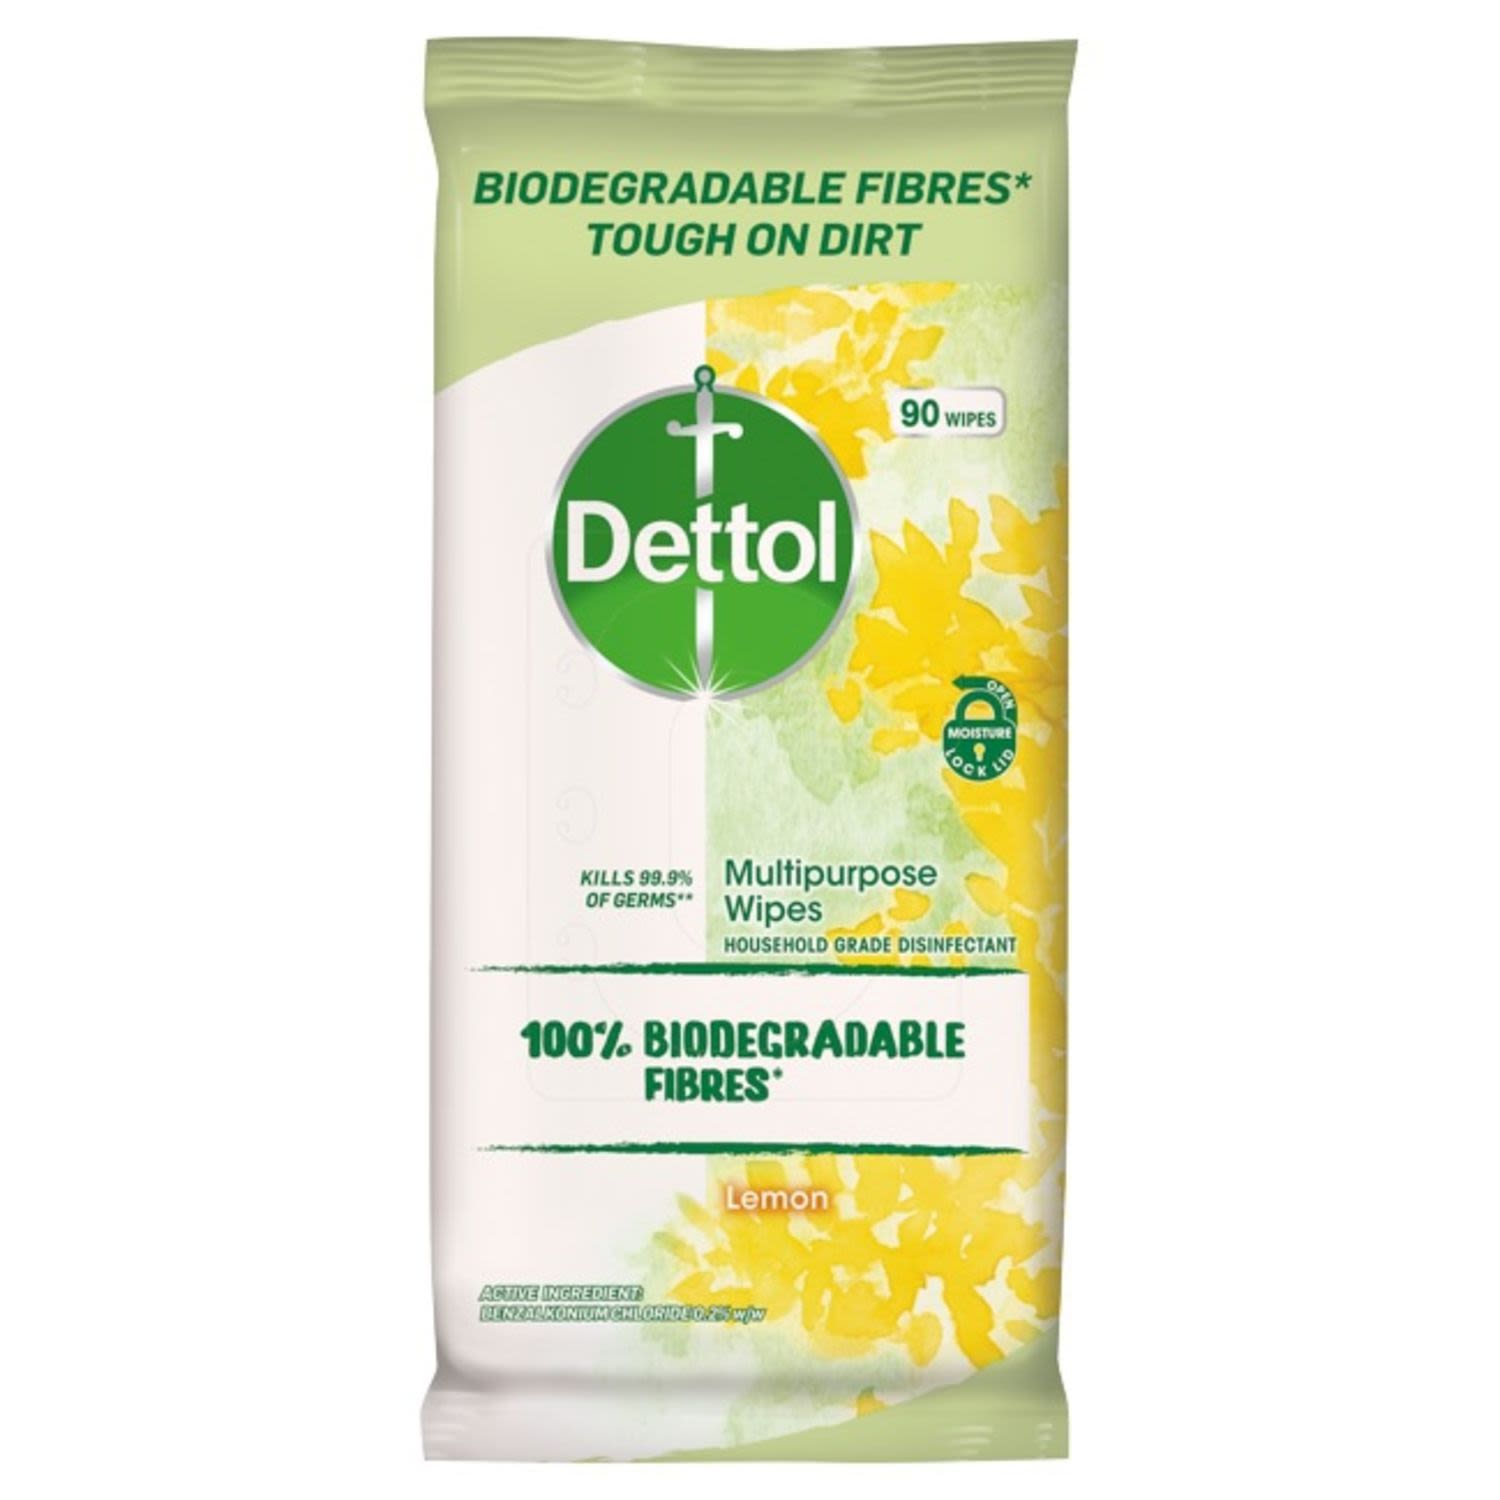 Dettol 100% Biodegradable Disinfectant Wipes Lemon, 90 Each